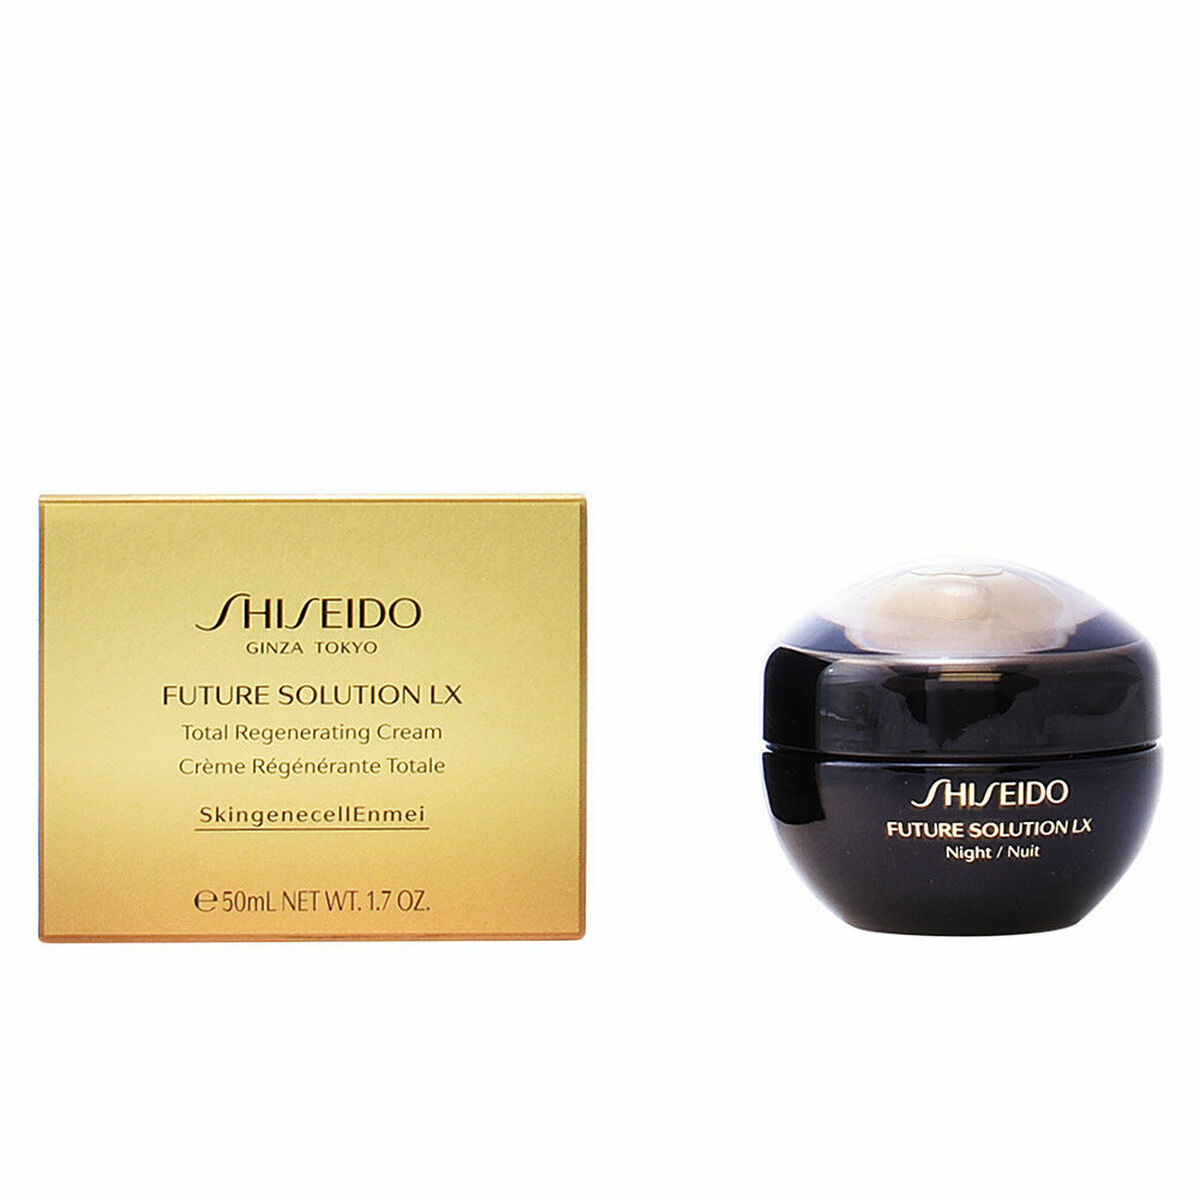 Shiseido solution